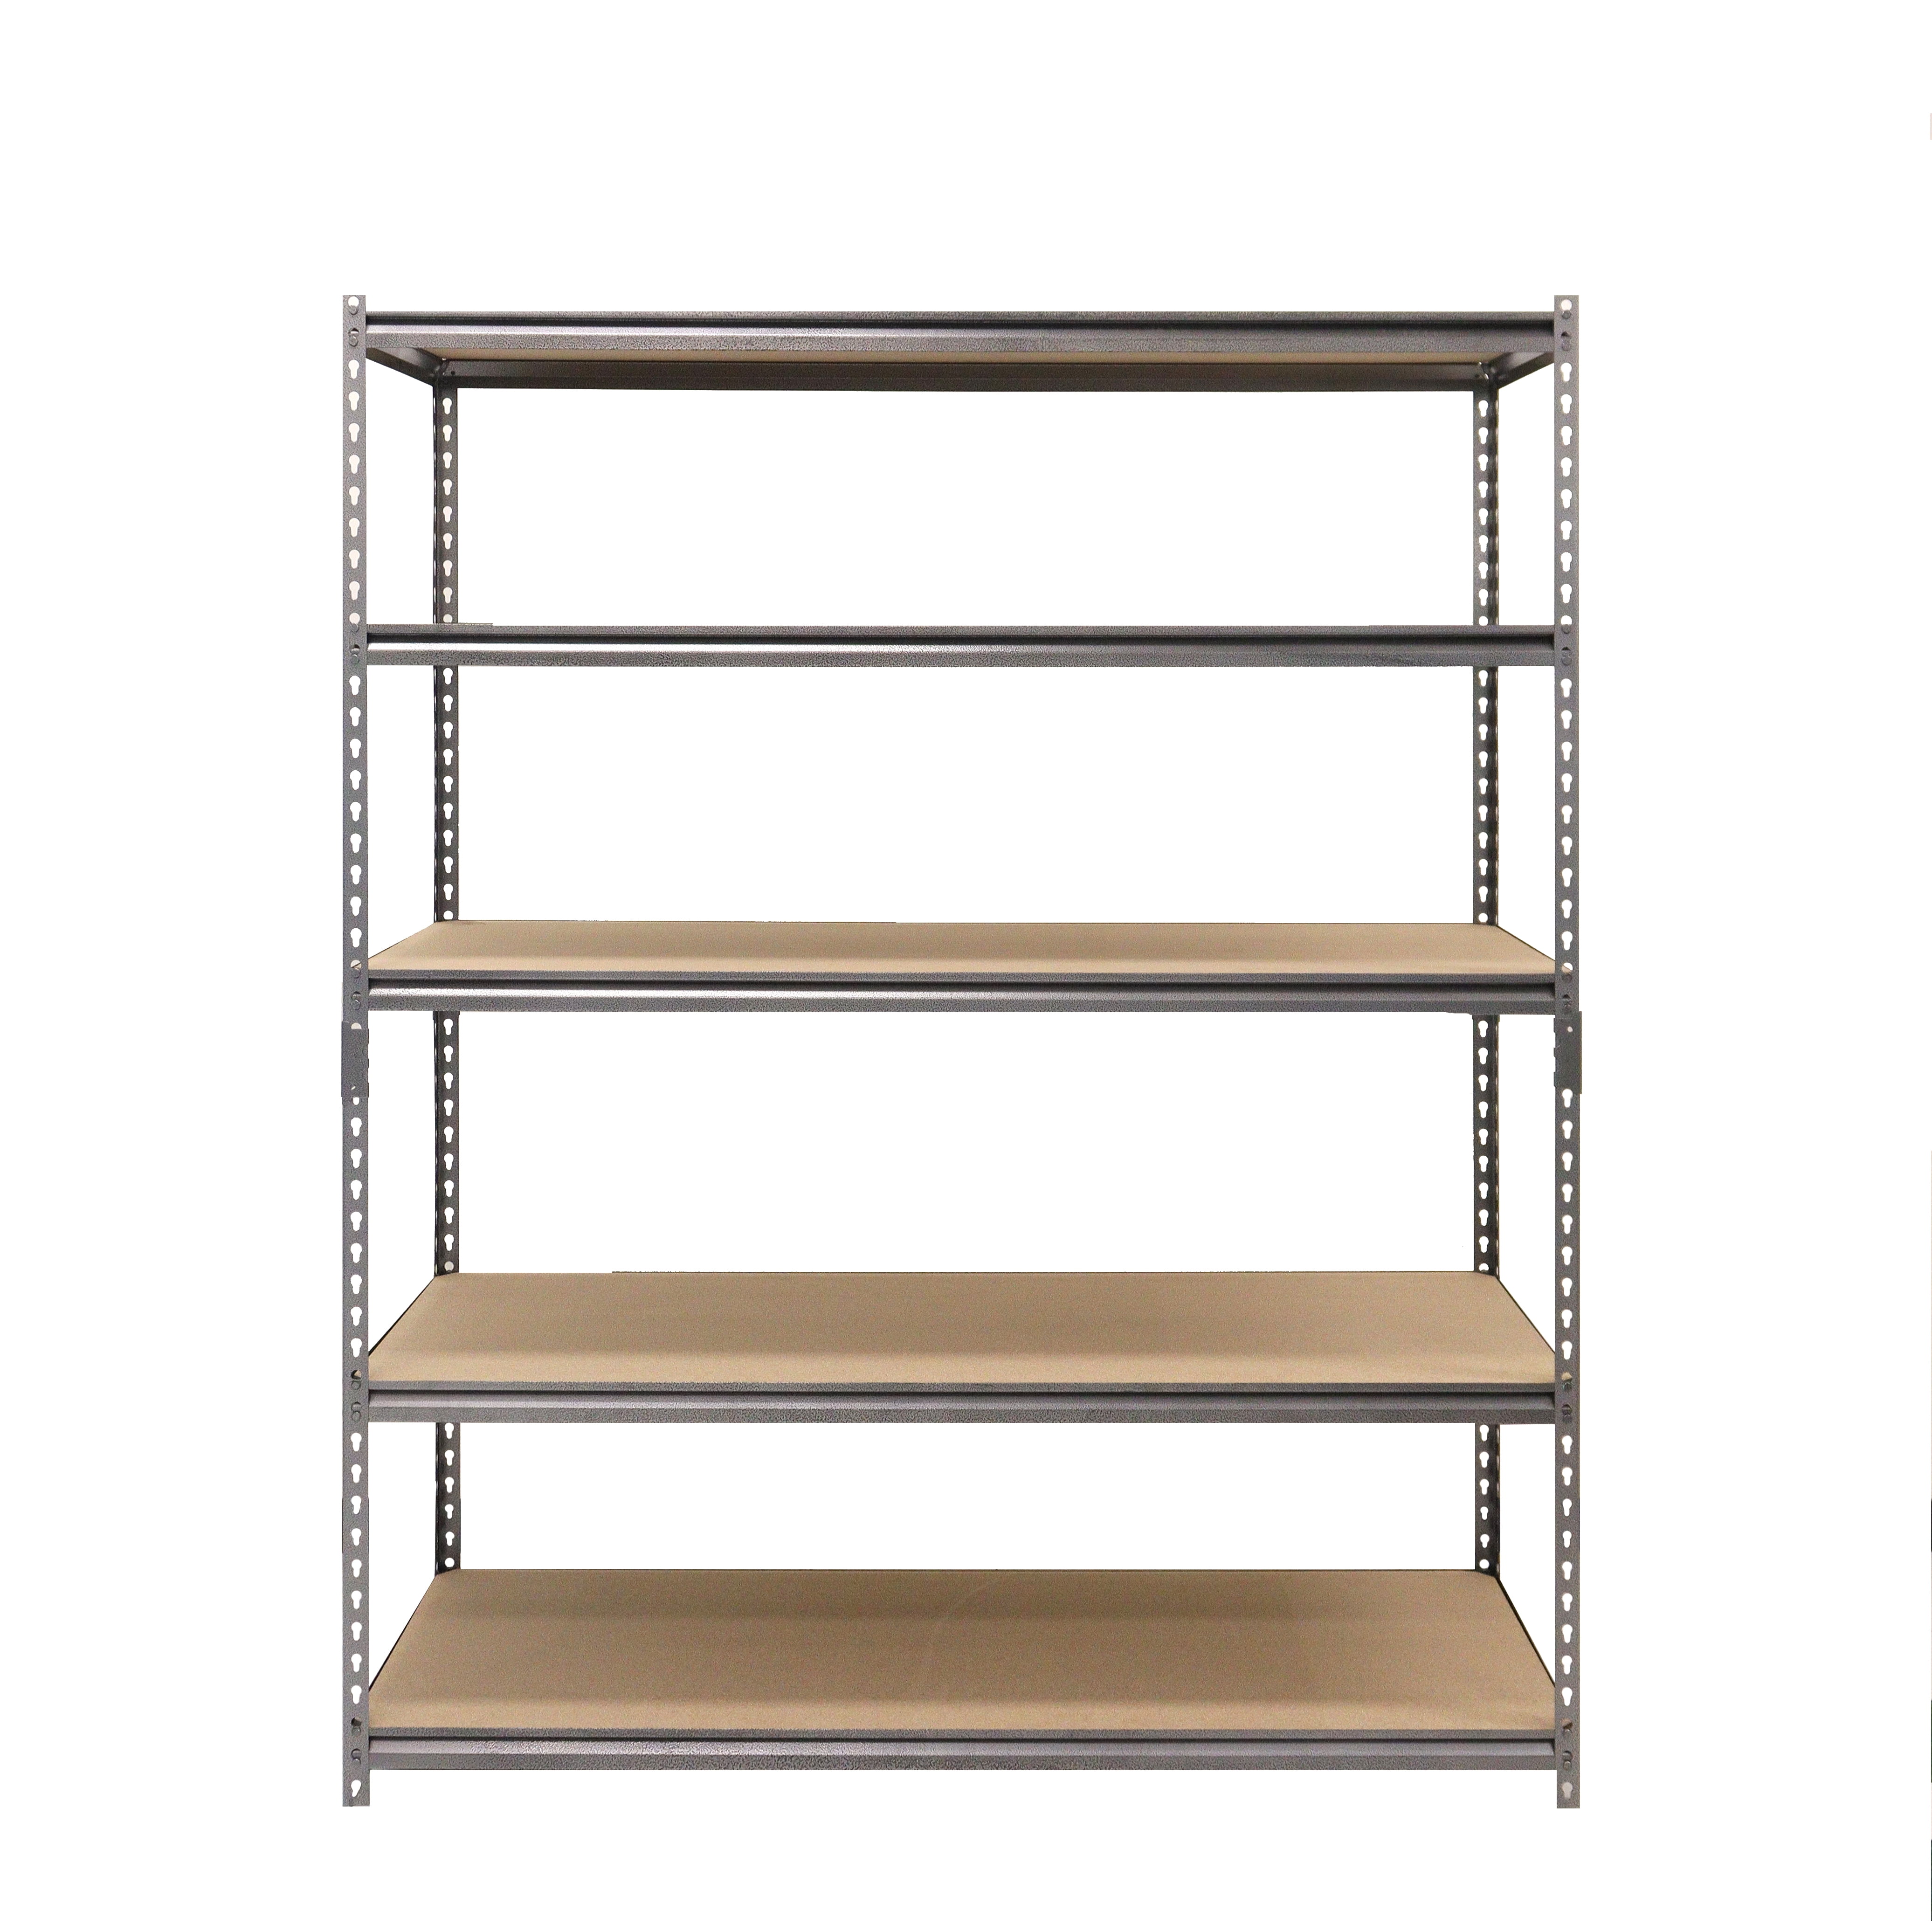 3 Tier Shelf Shelving Units Stainless Steel Wire Metal Storage Garage Shelves